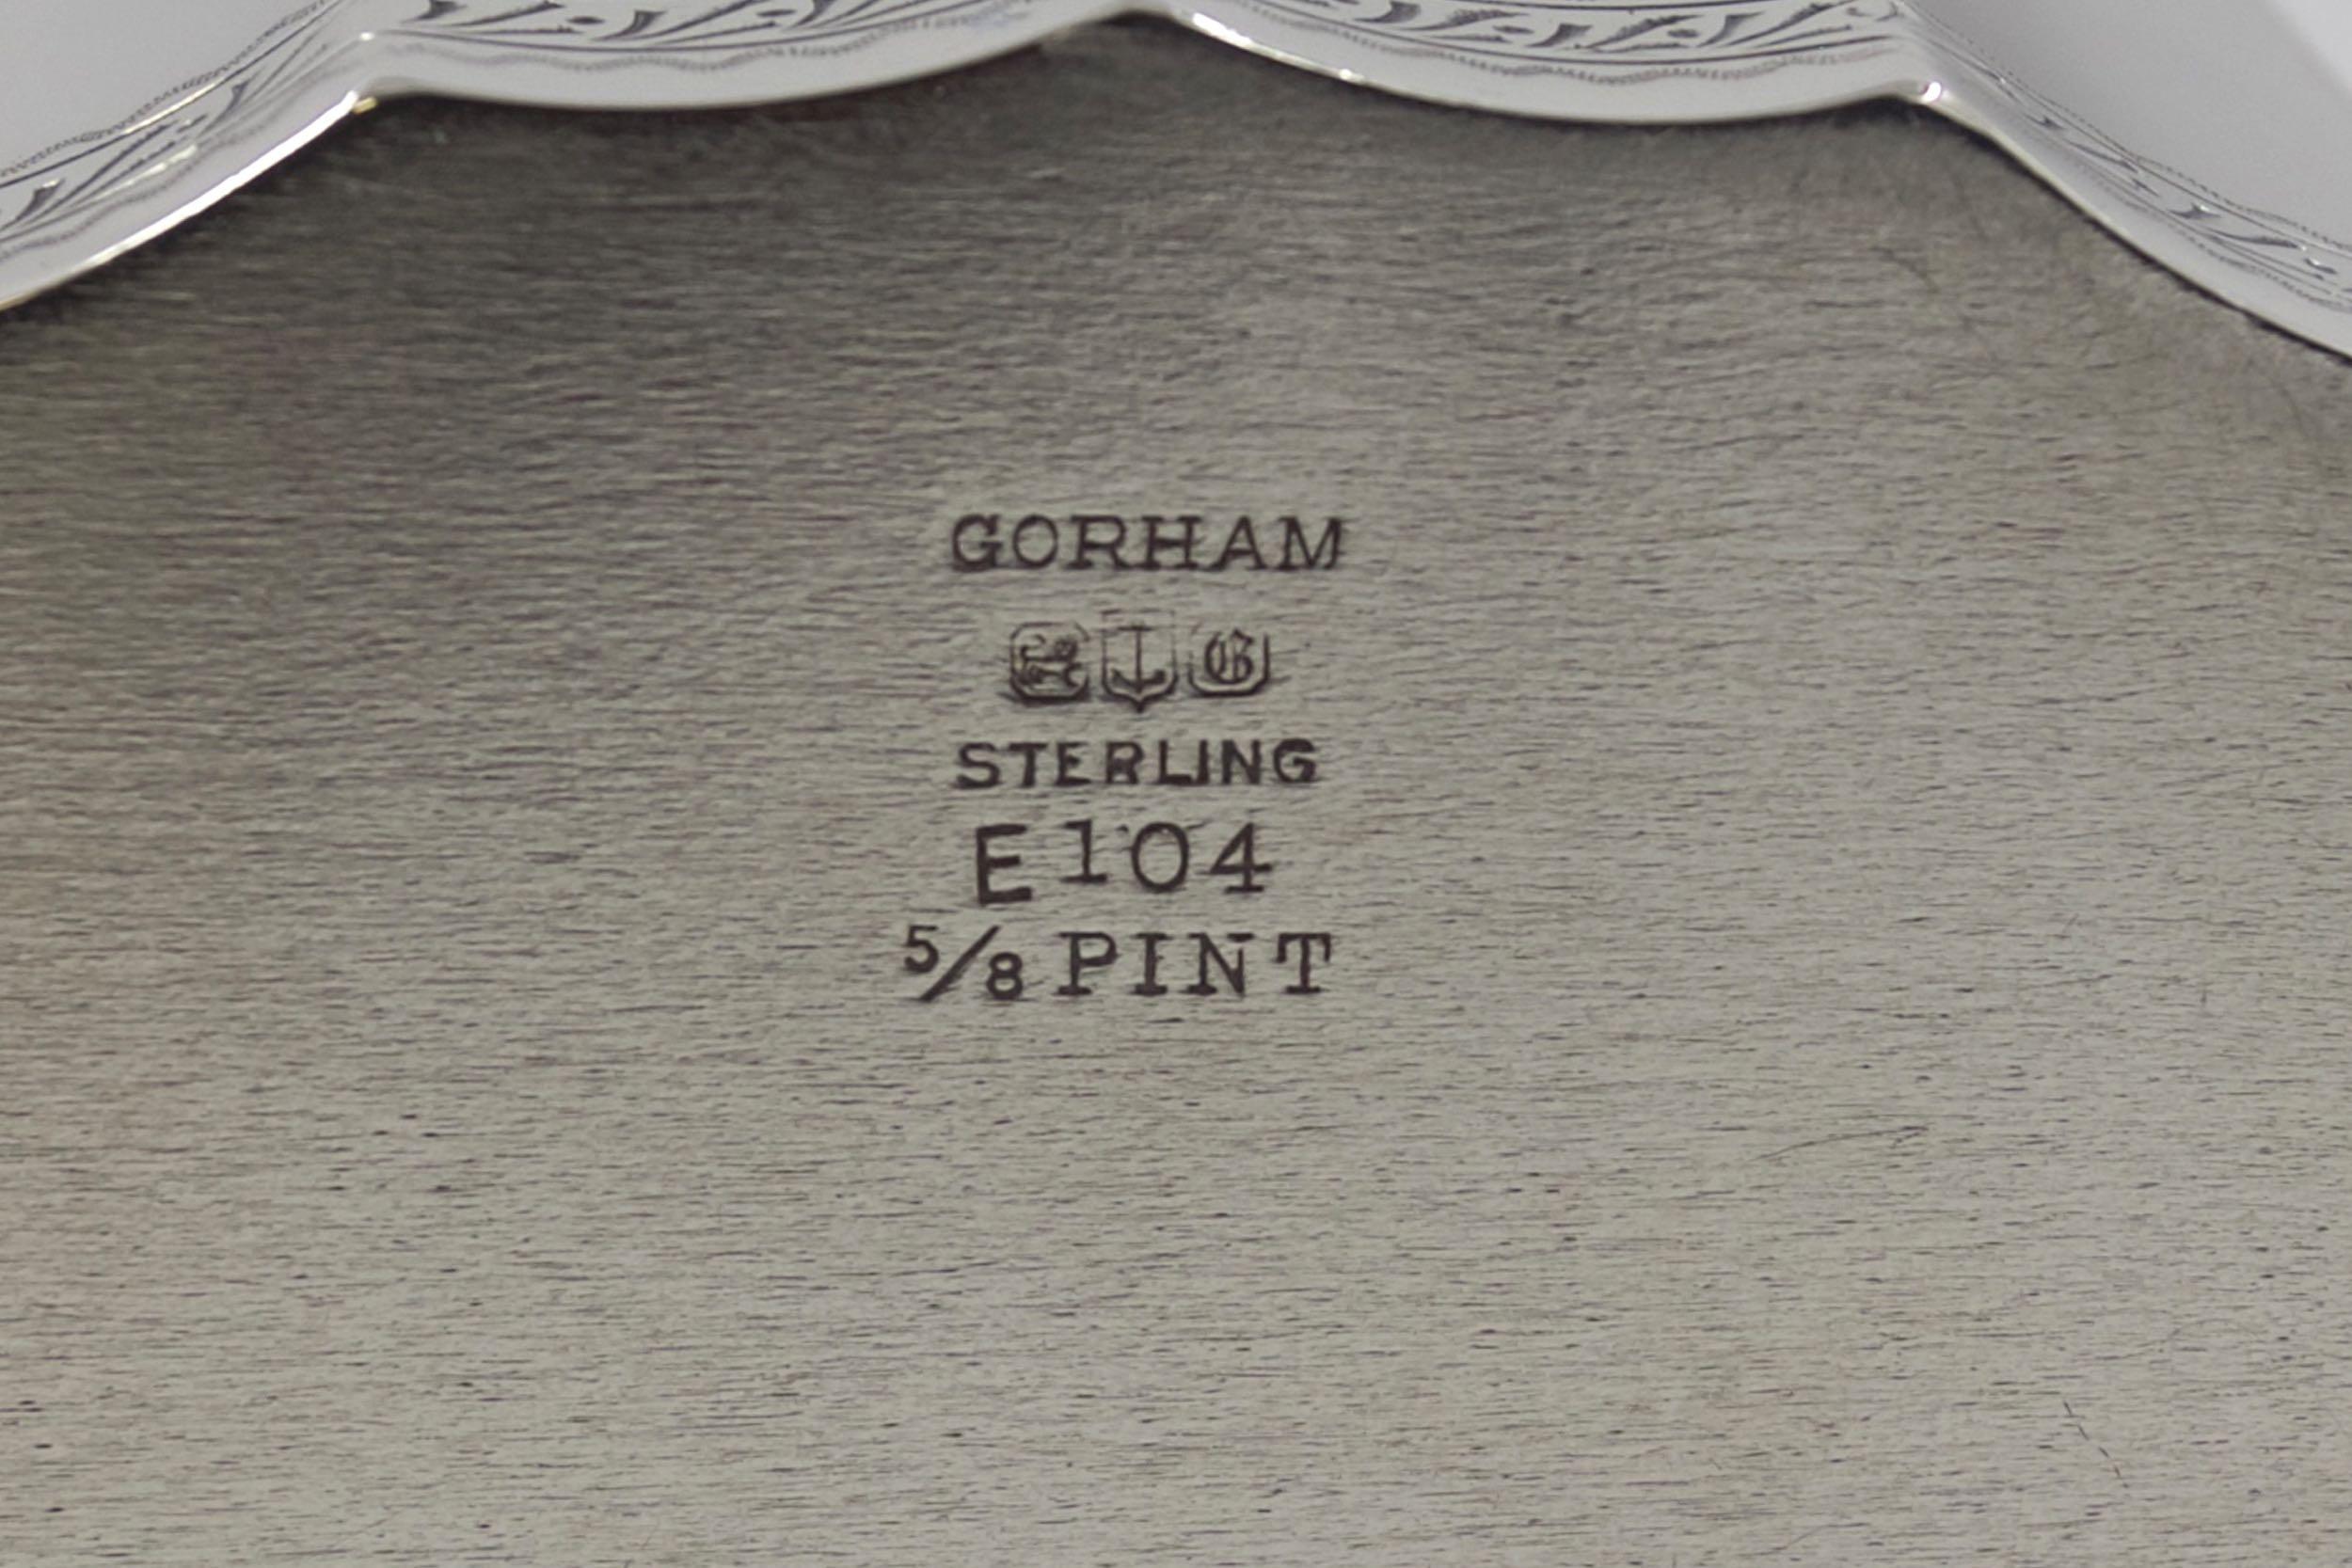 Fine Gorham Co. Sterling Silver Tea Coffee Service Set, 20th Century 4